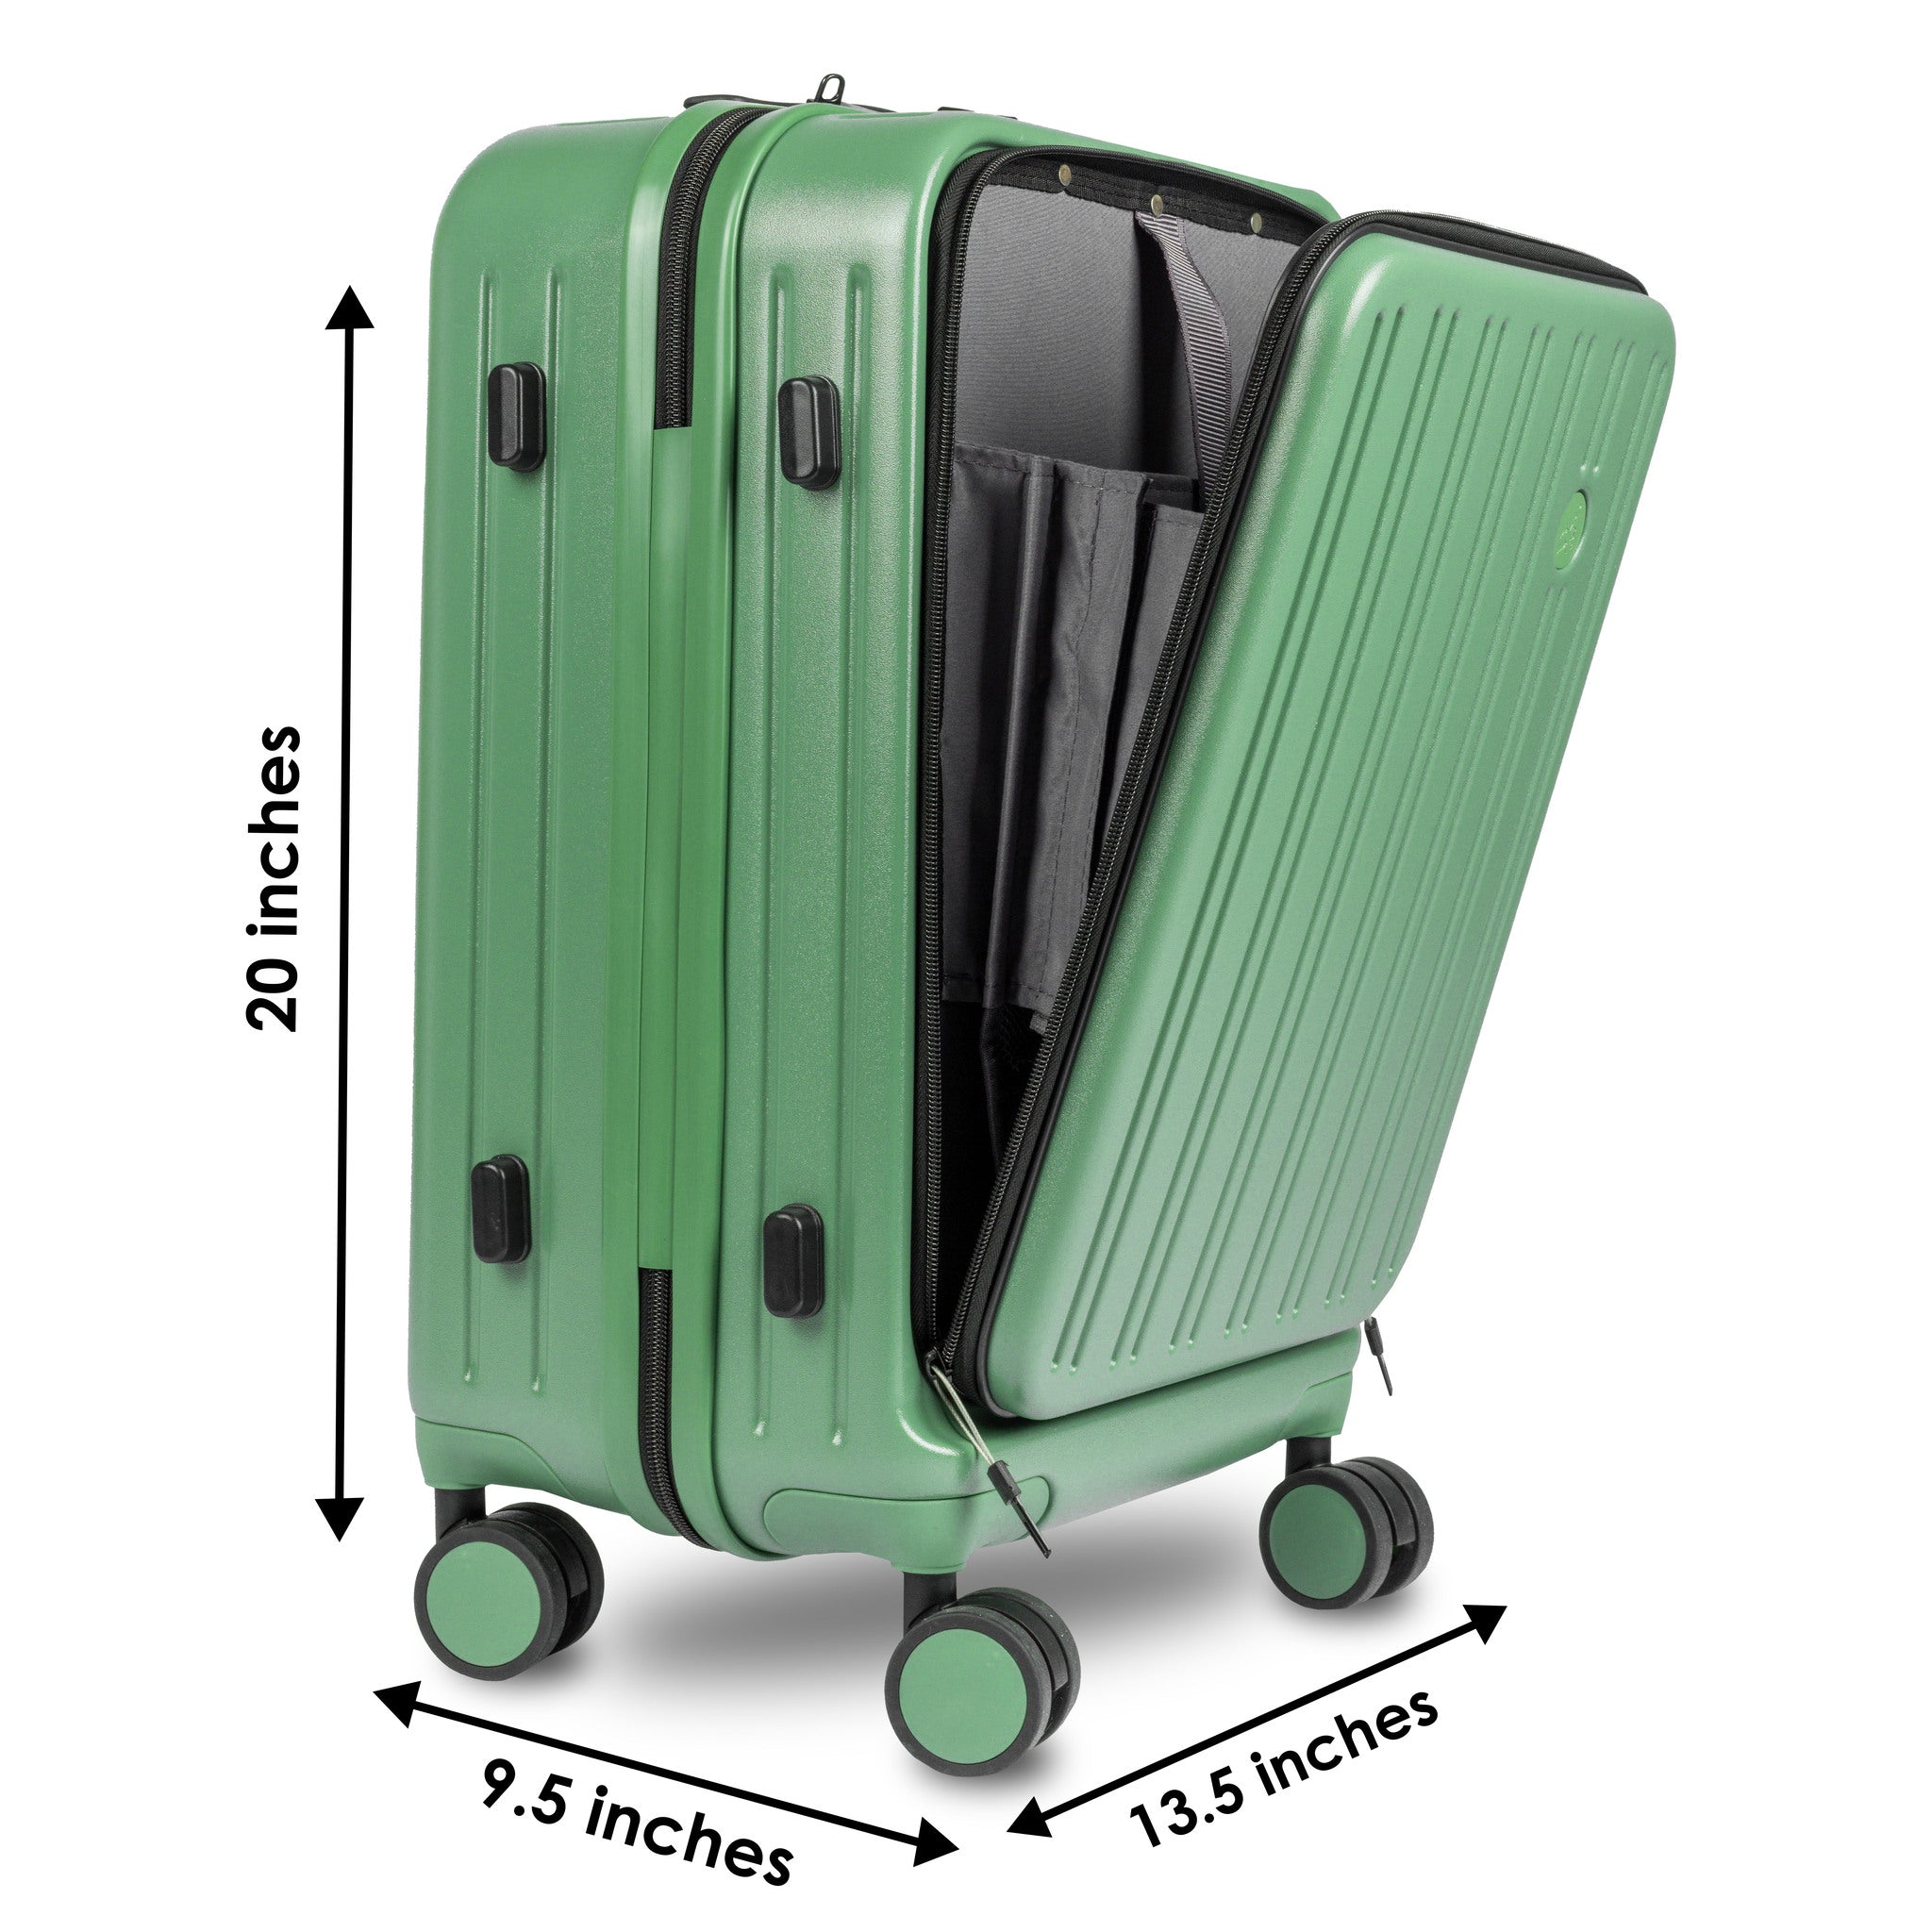 BLCK 3 Trolley Bags | Premium Luggage Collection | Elegant Auto Retail